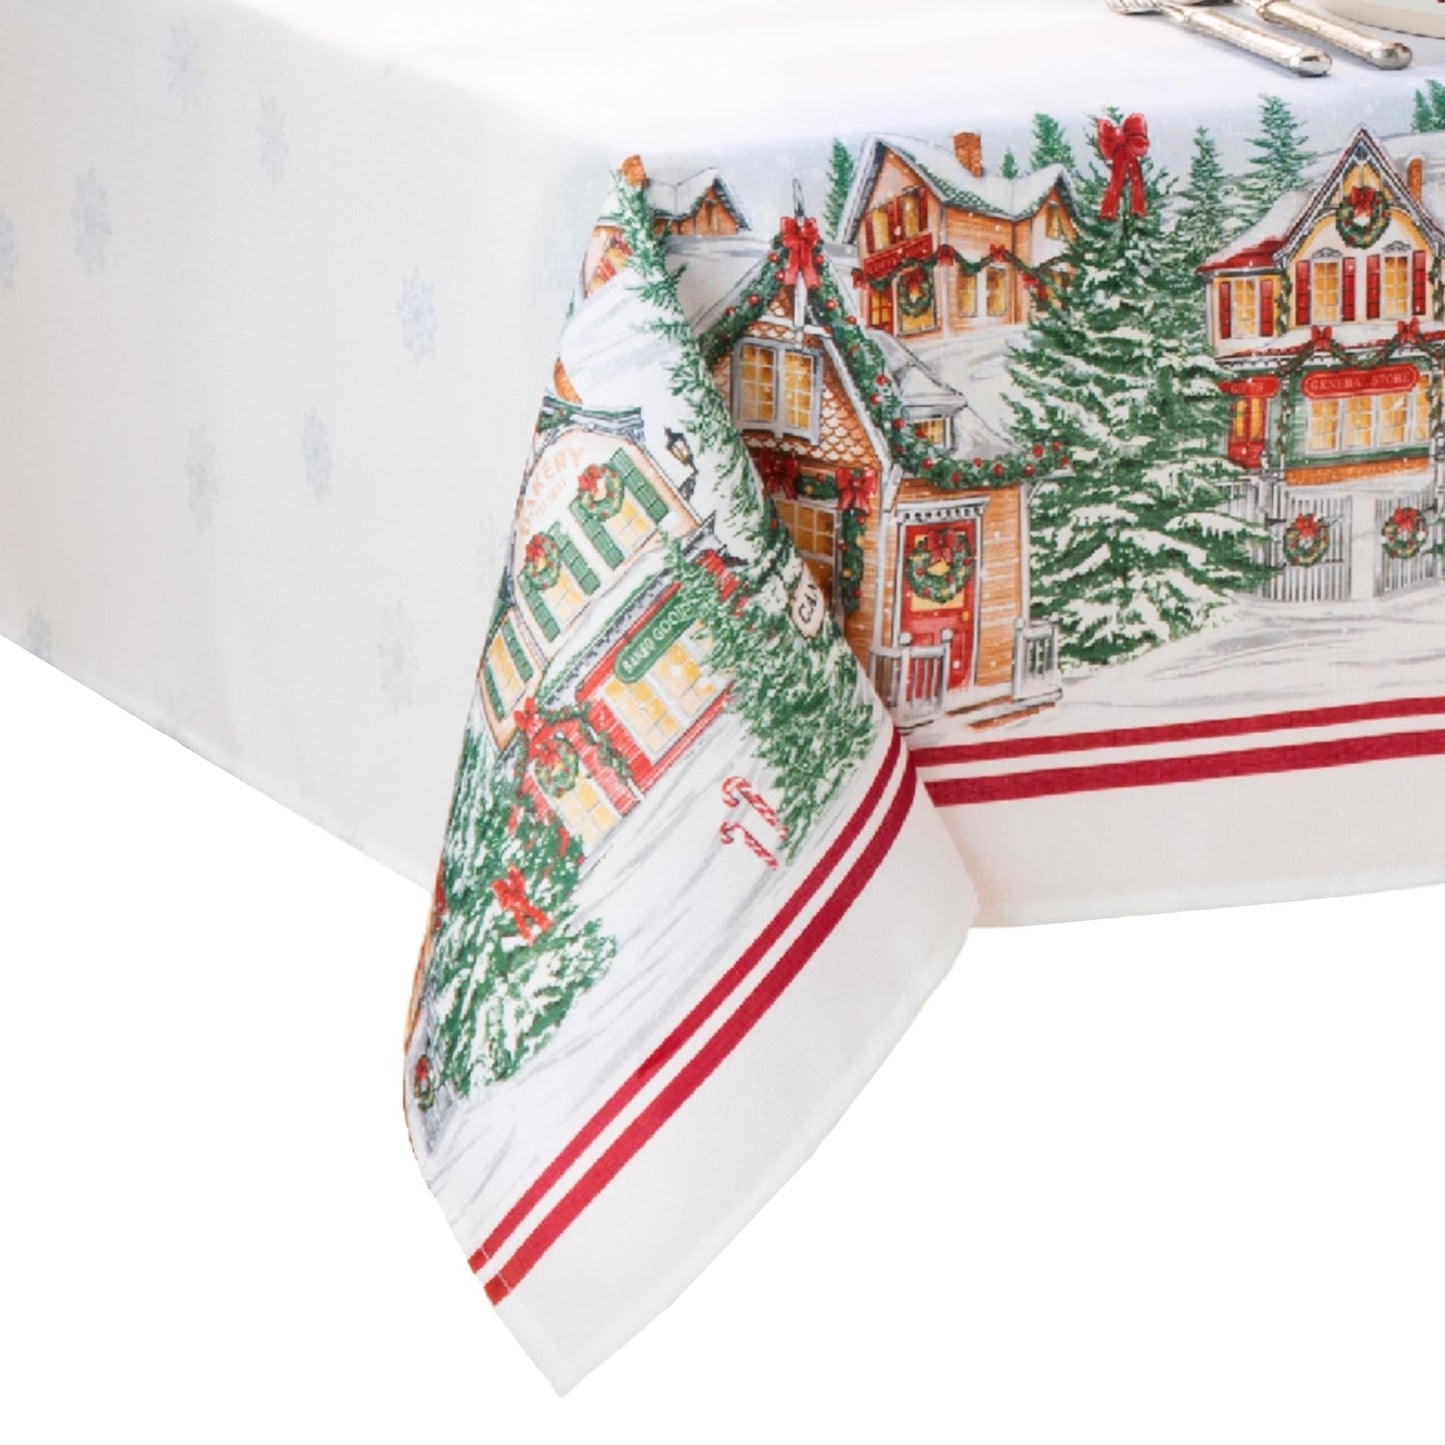 Storybook Christmas Village Holiday Tablecloth